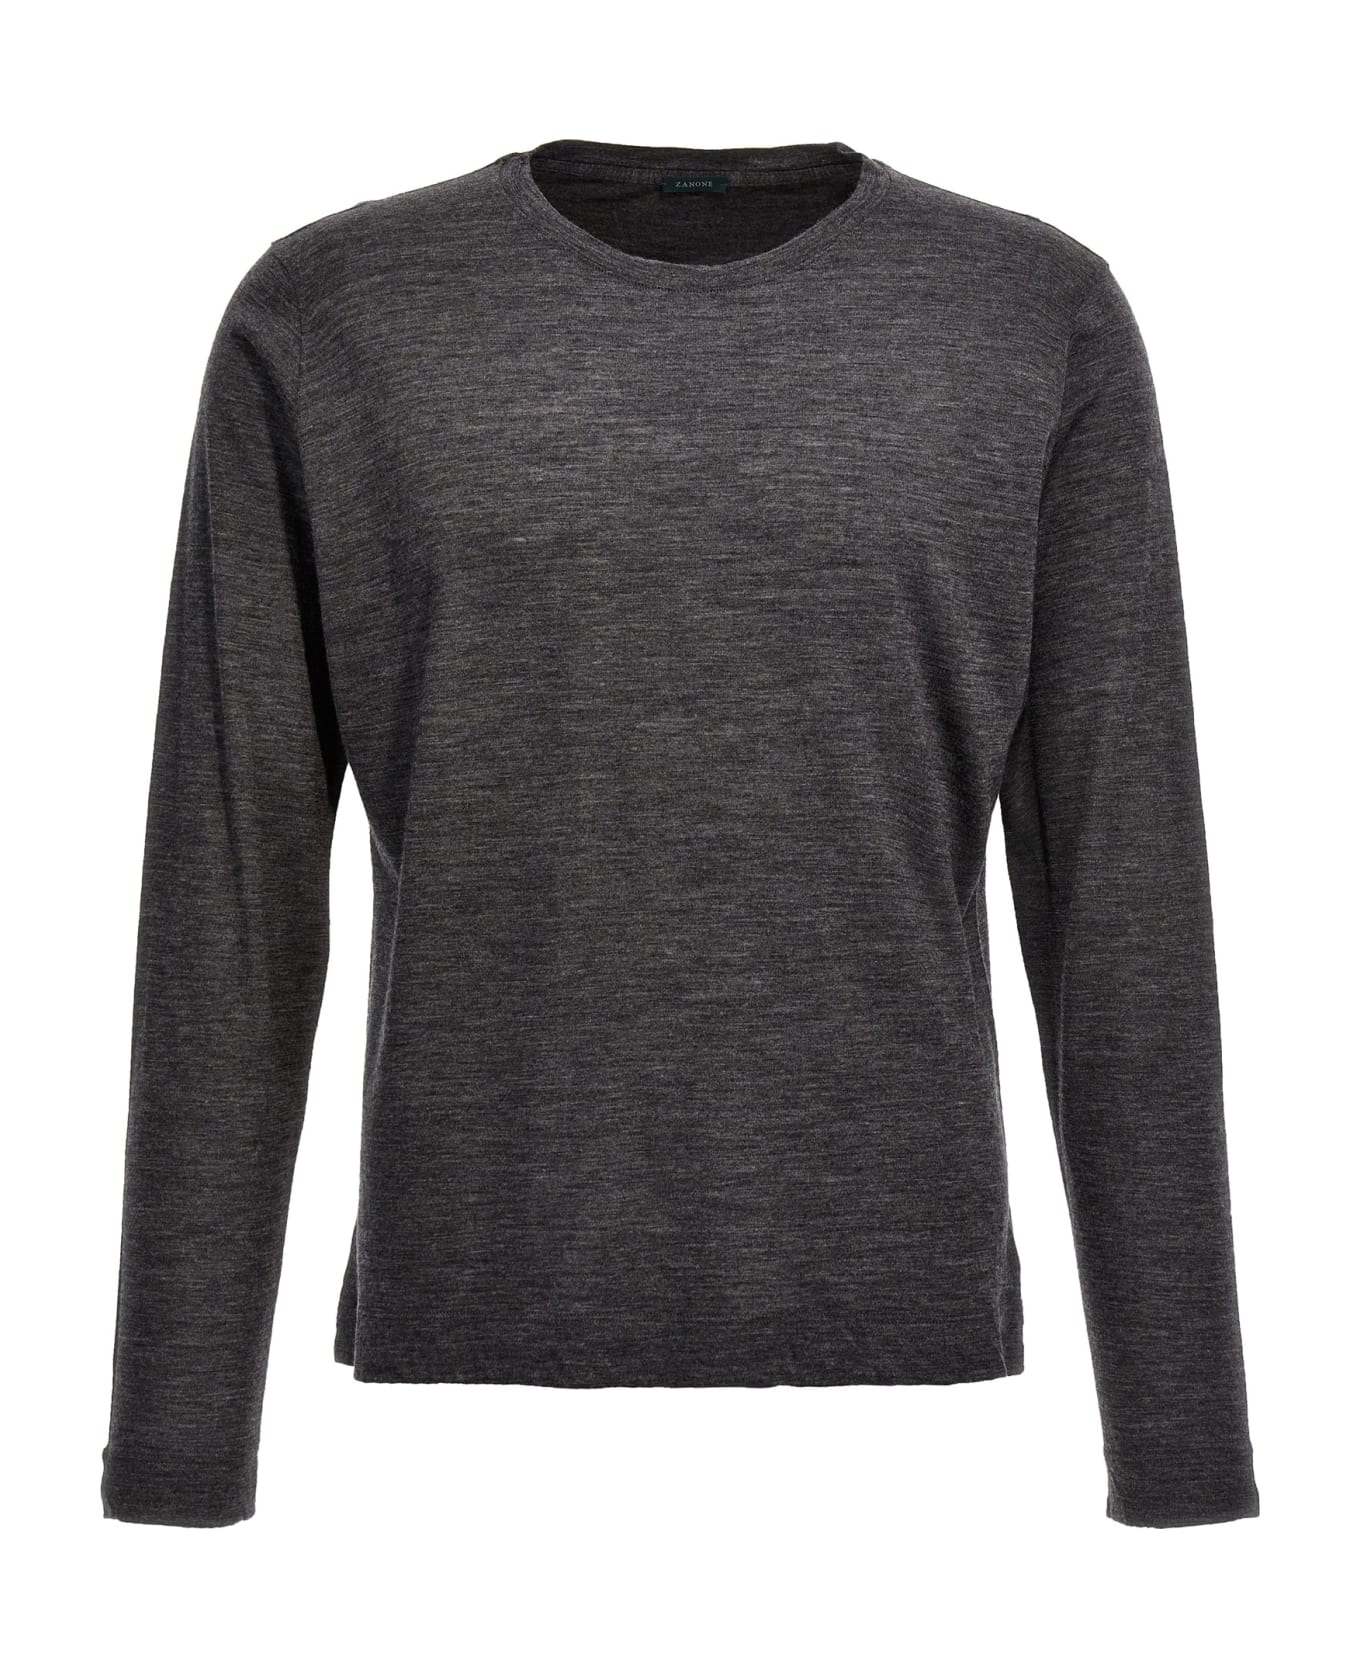 Zanone Wool Sweater - Gray